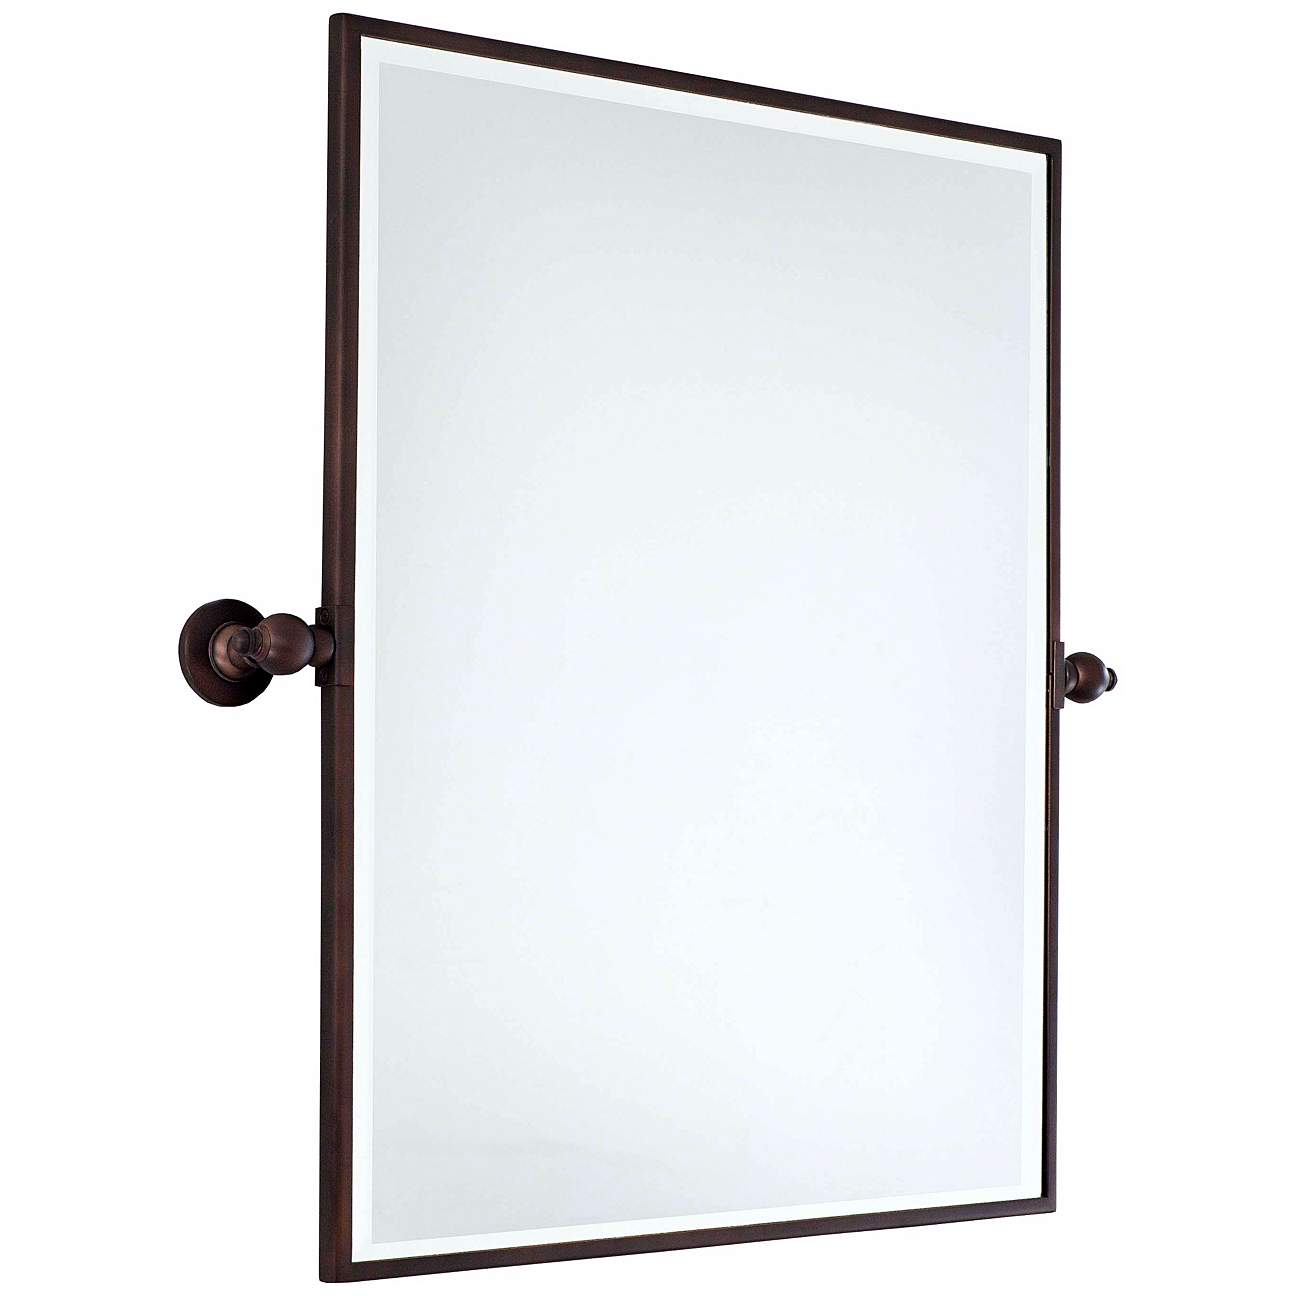 Minka 30 Inch High Xl Dark Brushed Bronze Bathroom Wall Mirror  V2155views1 ?qlt=65&wid=1296&hei=1296&op Sharpen=1&fmt=jpeg